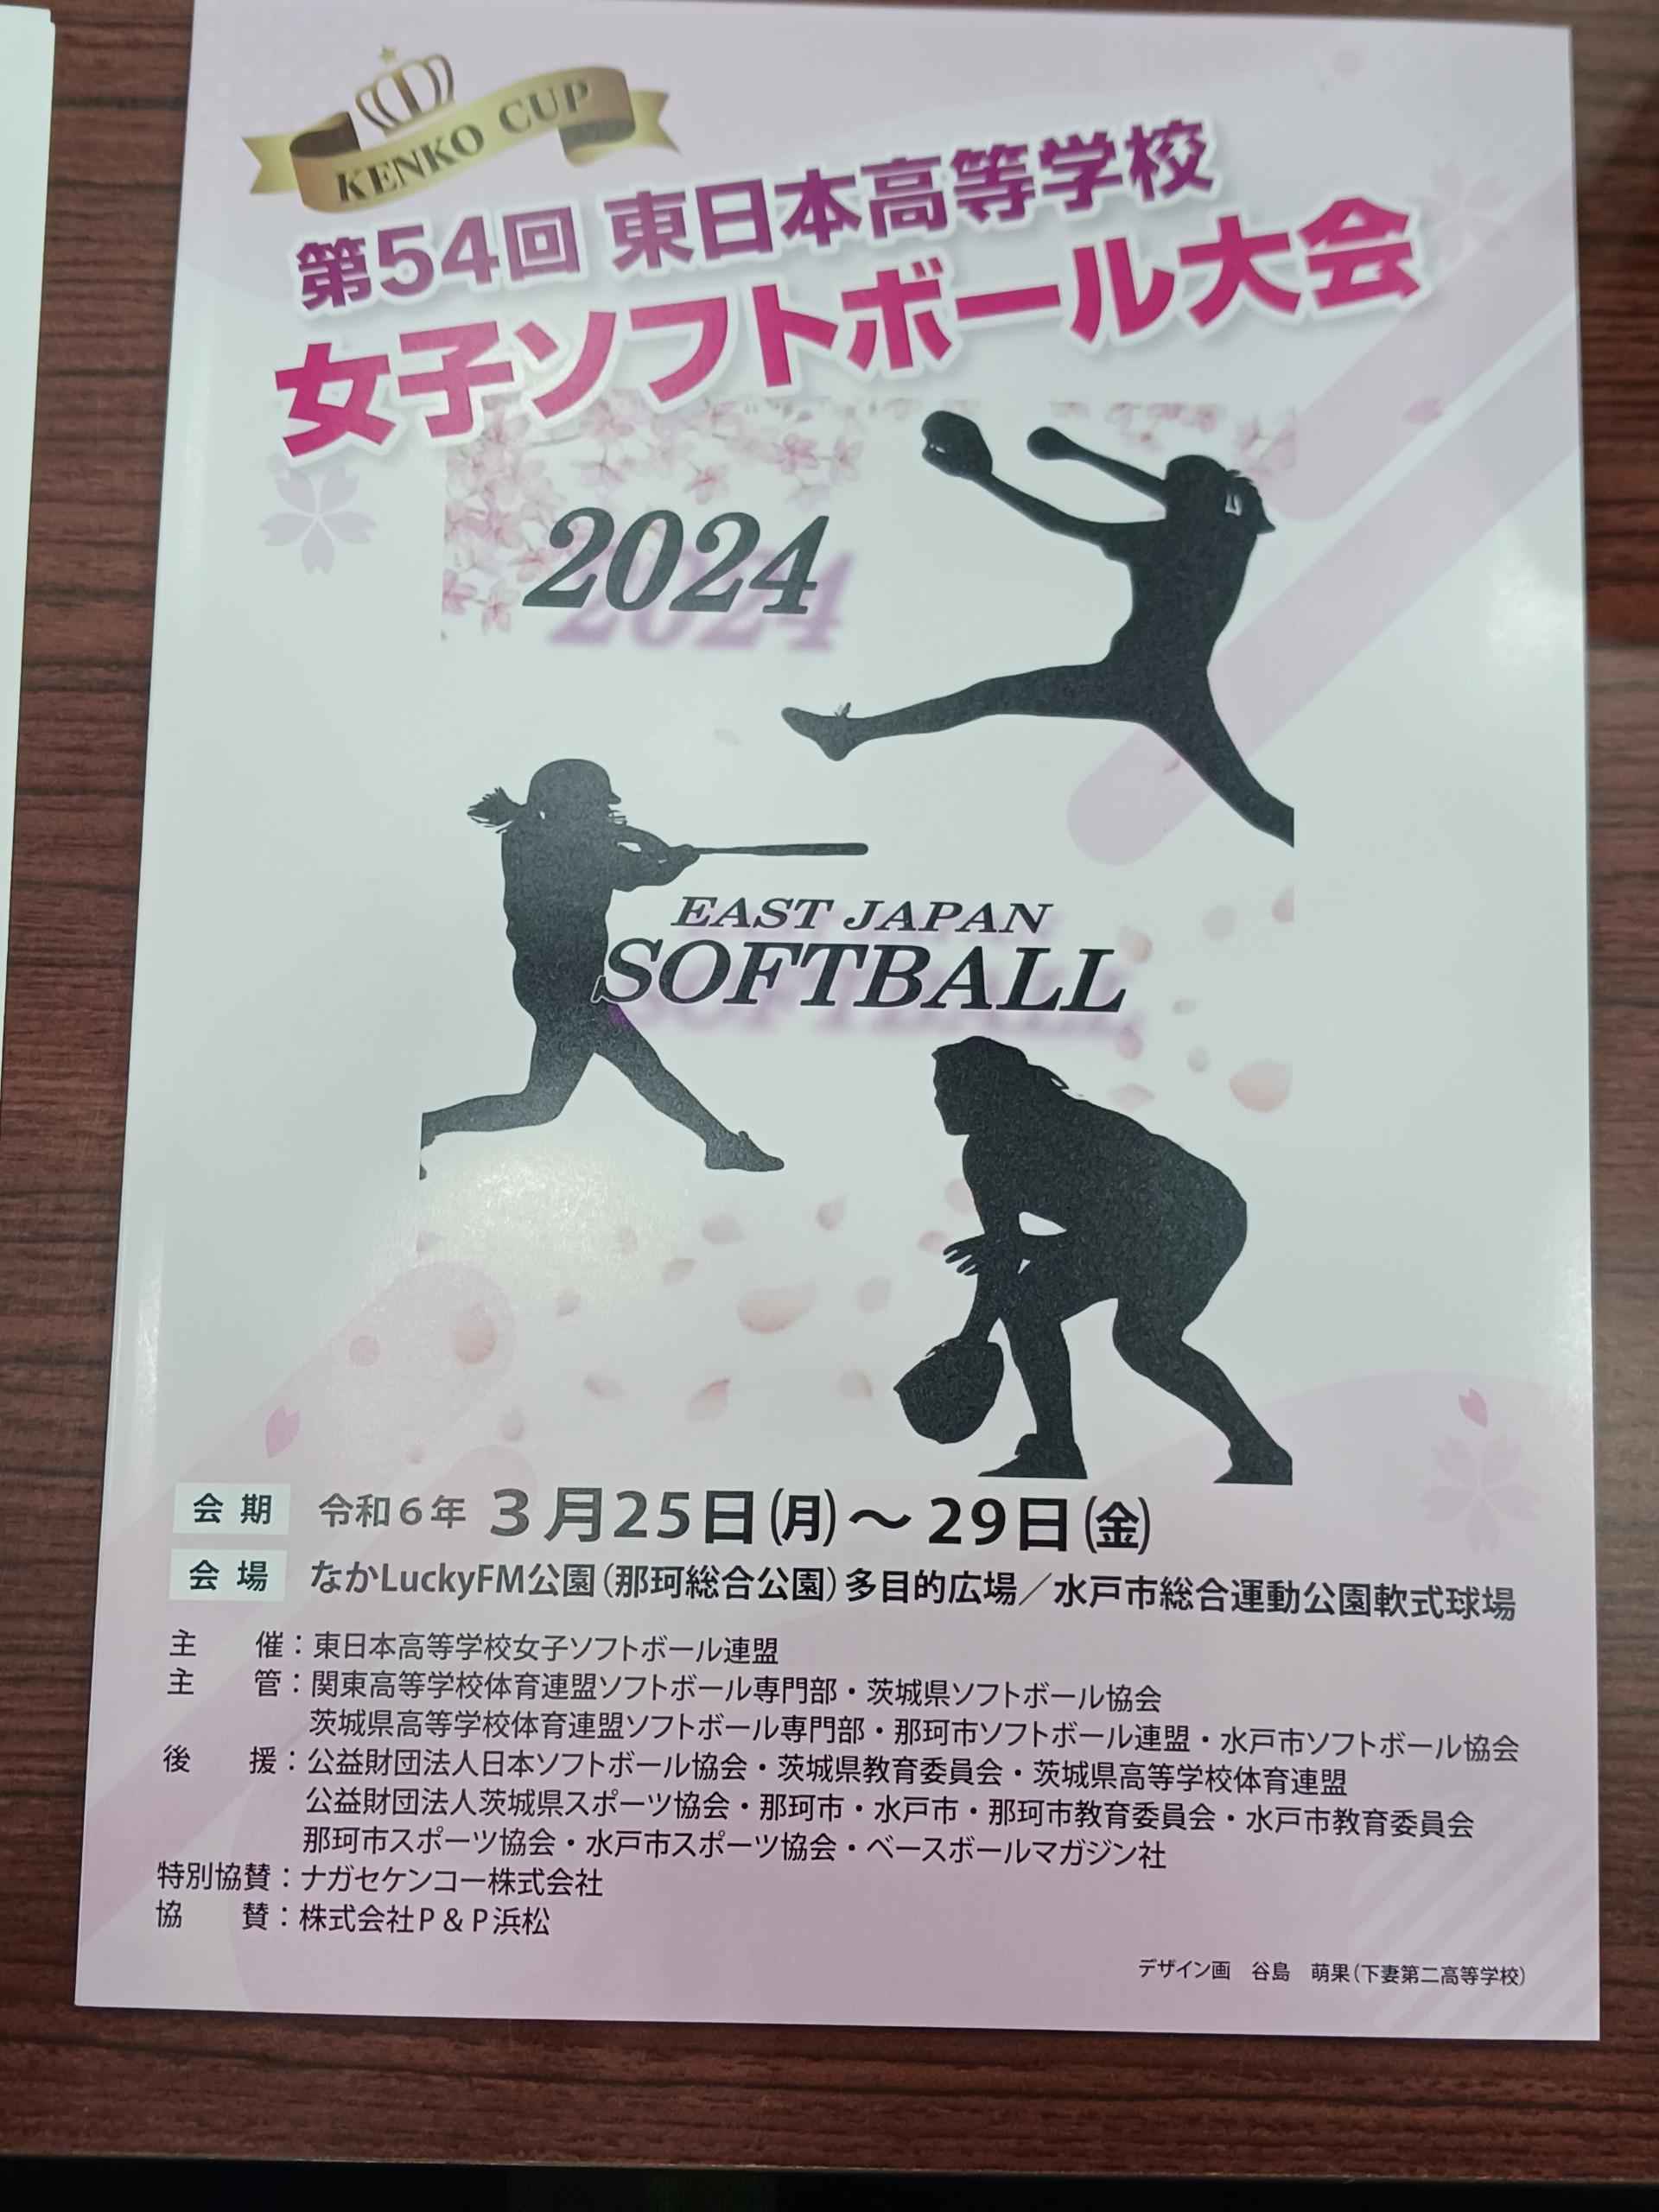 KENKO CUP第54回東日本高等学校女子ソフトボール大会